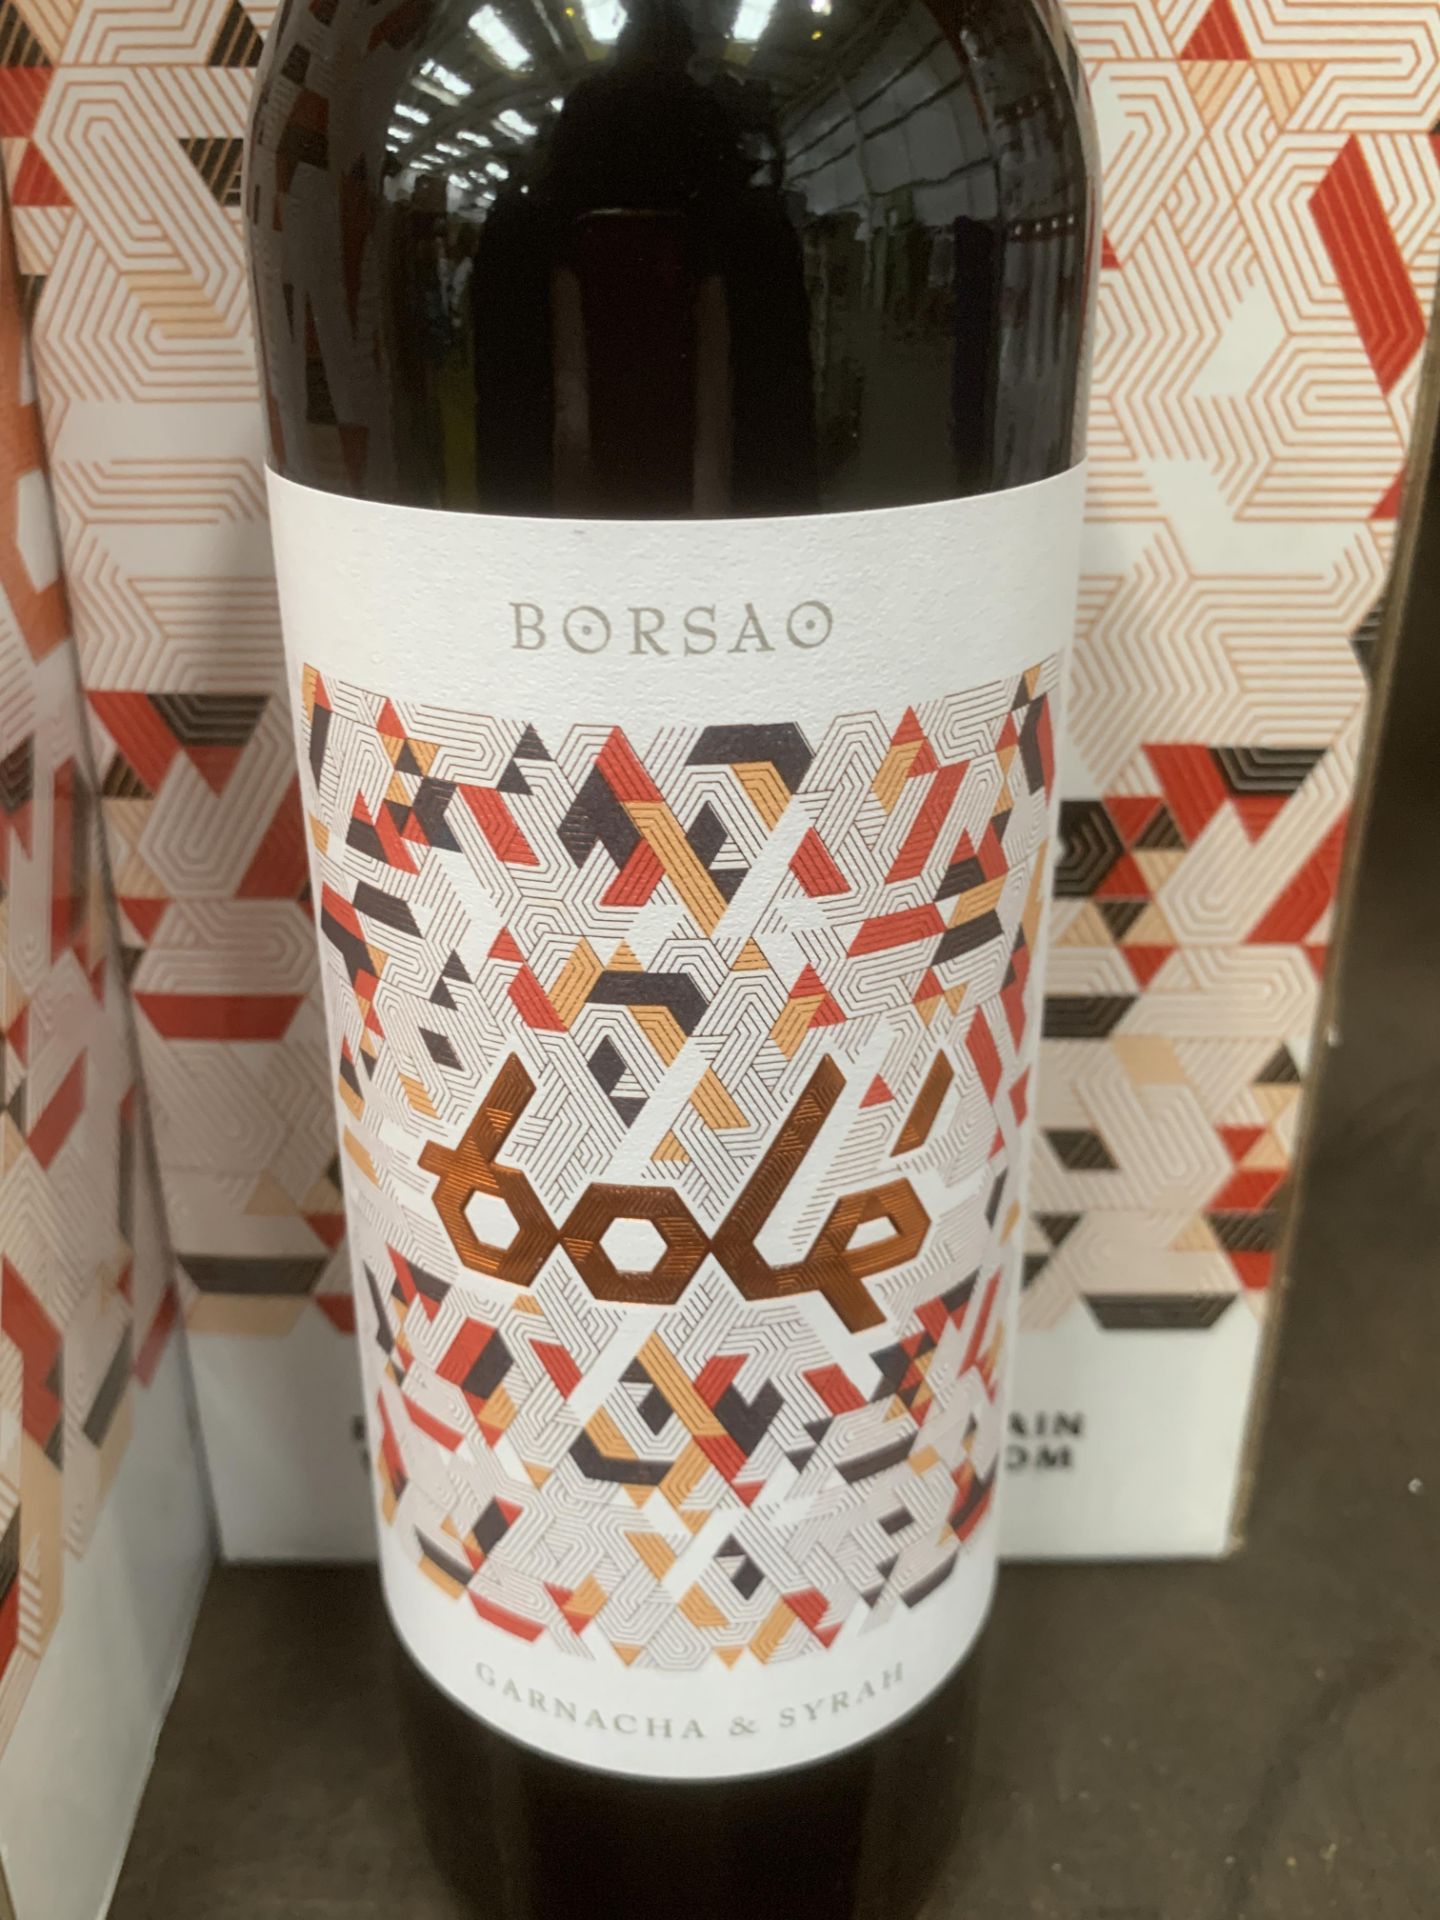 11x Bottles of Borsao Bole 2020 Red Wine - Image 2 of 3